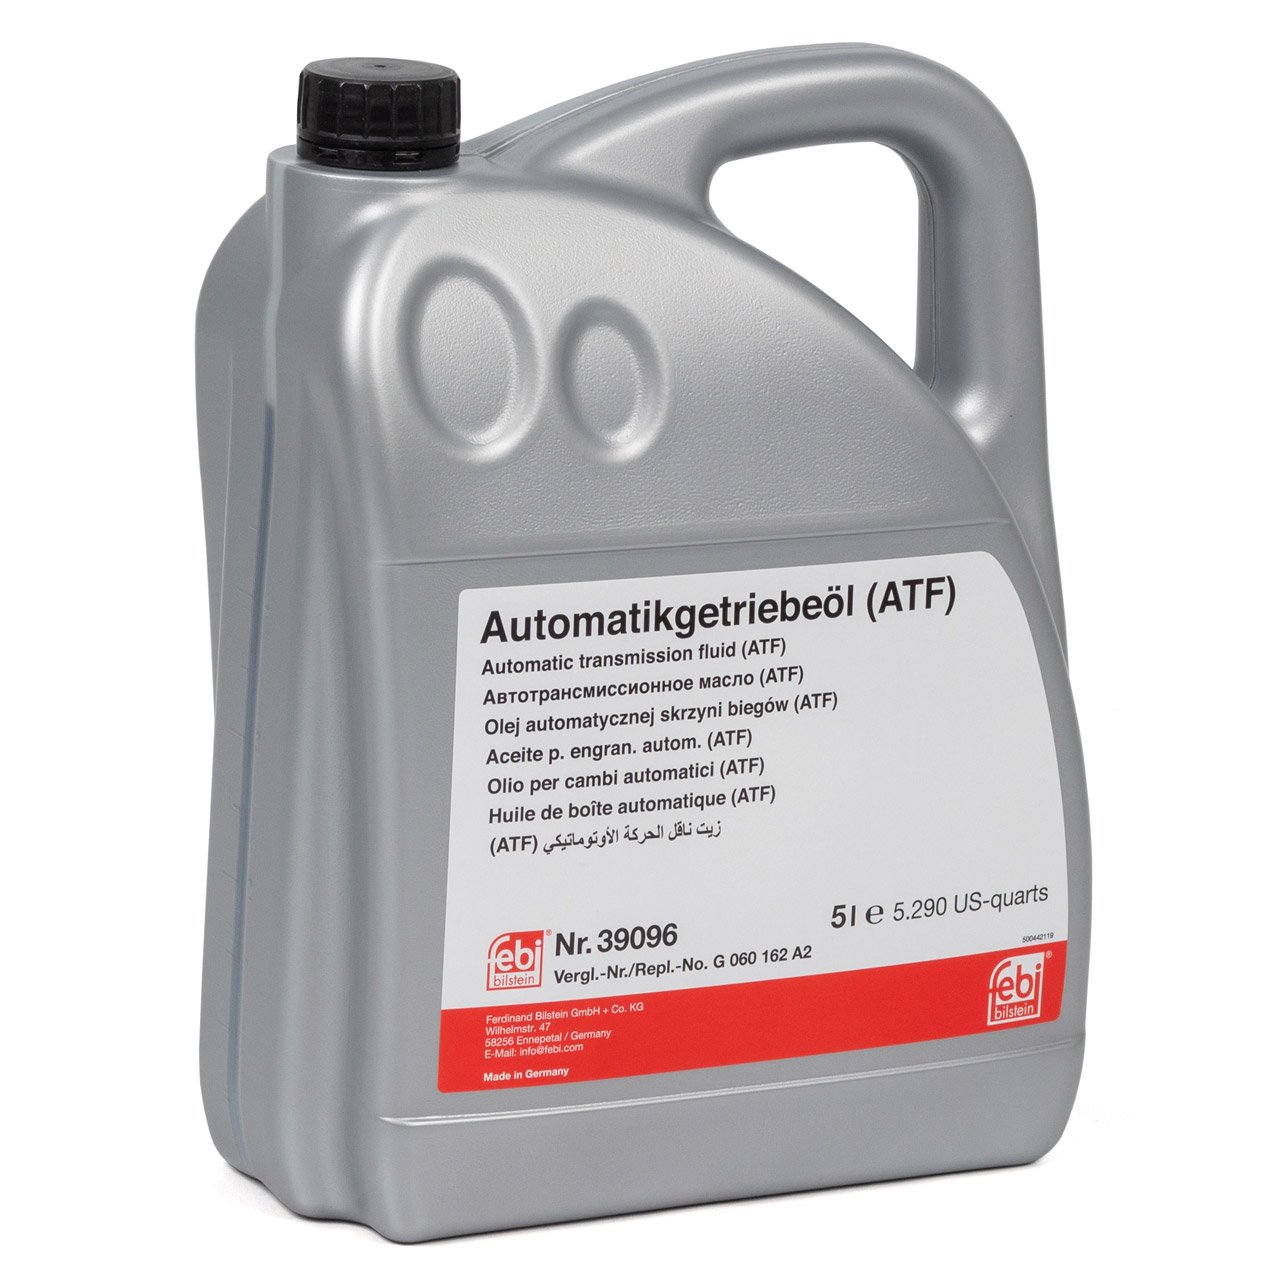 6L 6 Liter FEBI Automatikgetriebeöl ATF GRÜN für AUDI BMW CHRYSLER JAGUAR